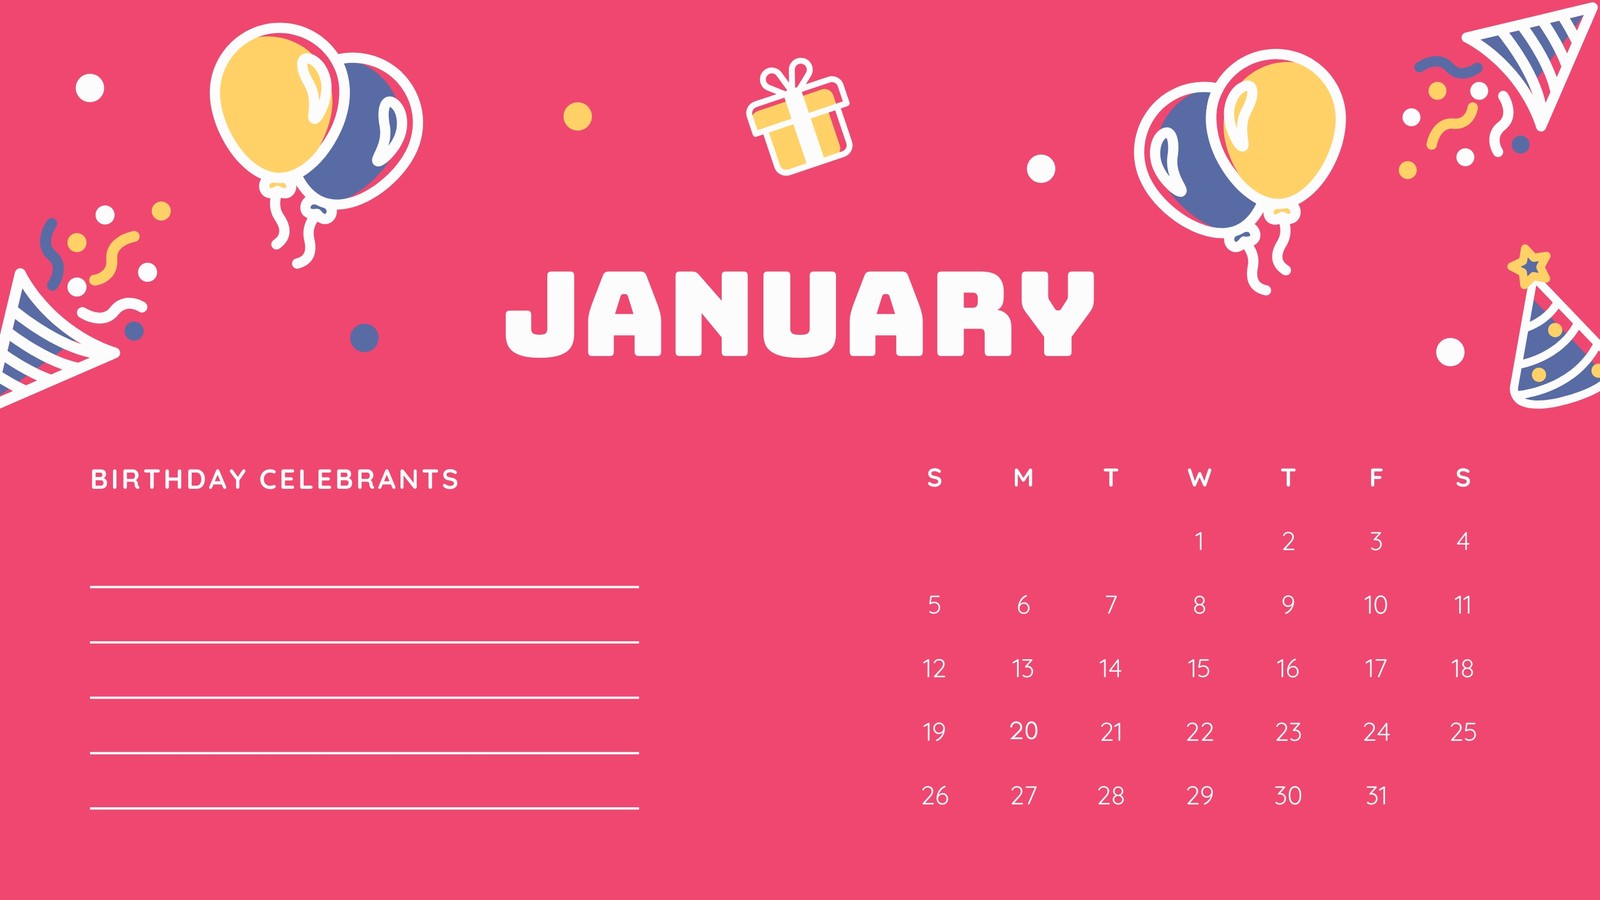 Free, printable, customizable birthday calendar templates Canva